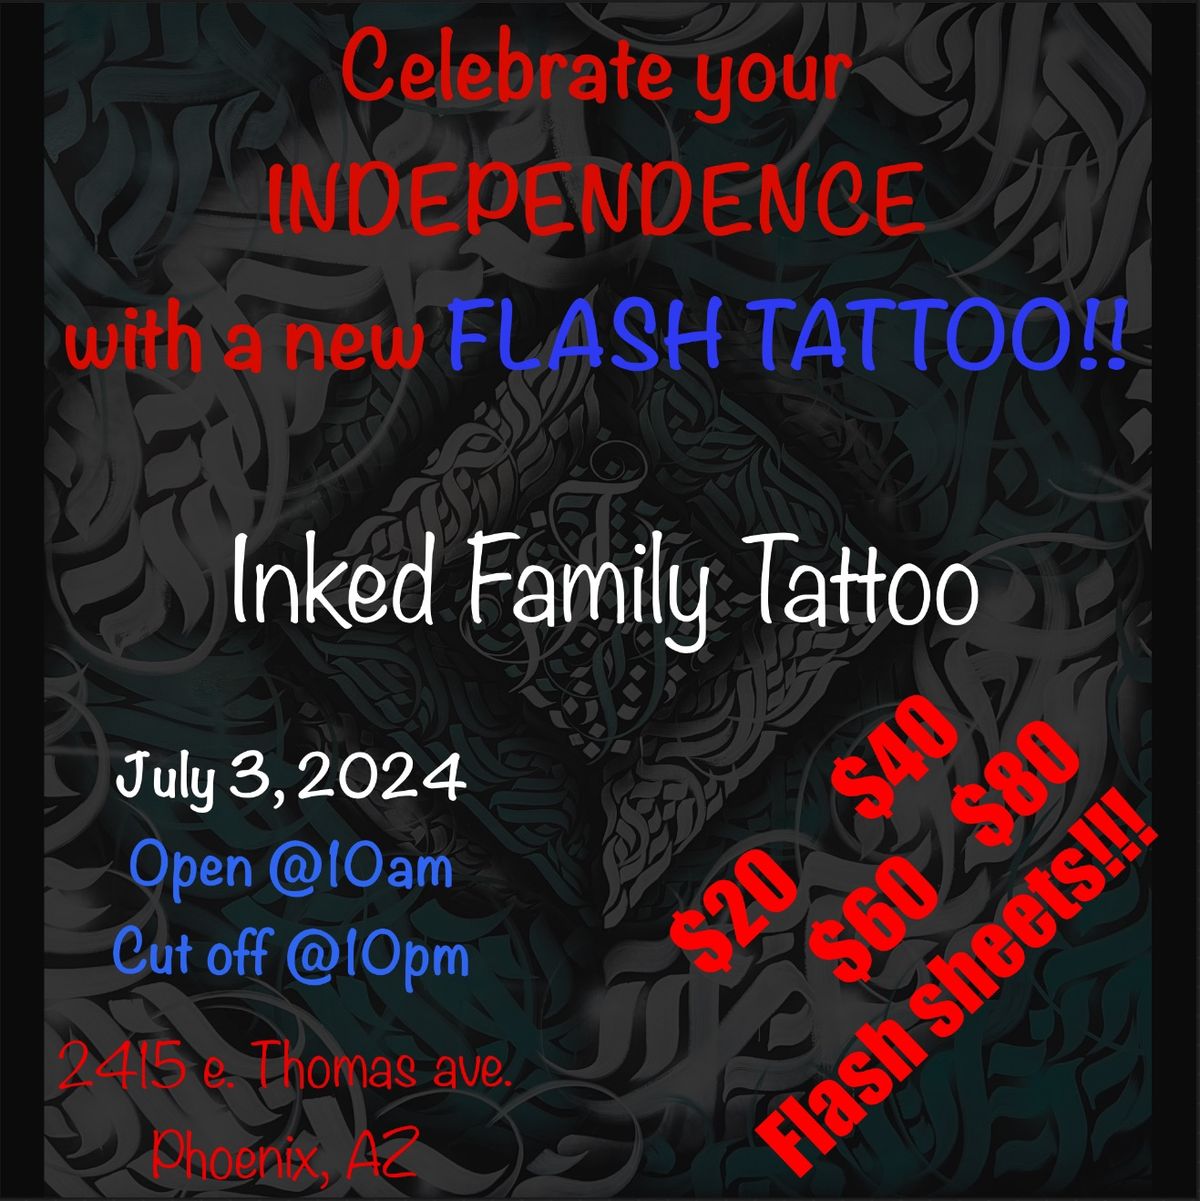  Independence Tattoo Flash Sale!!!